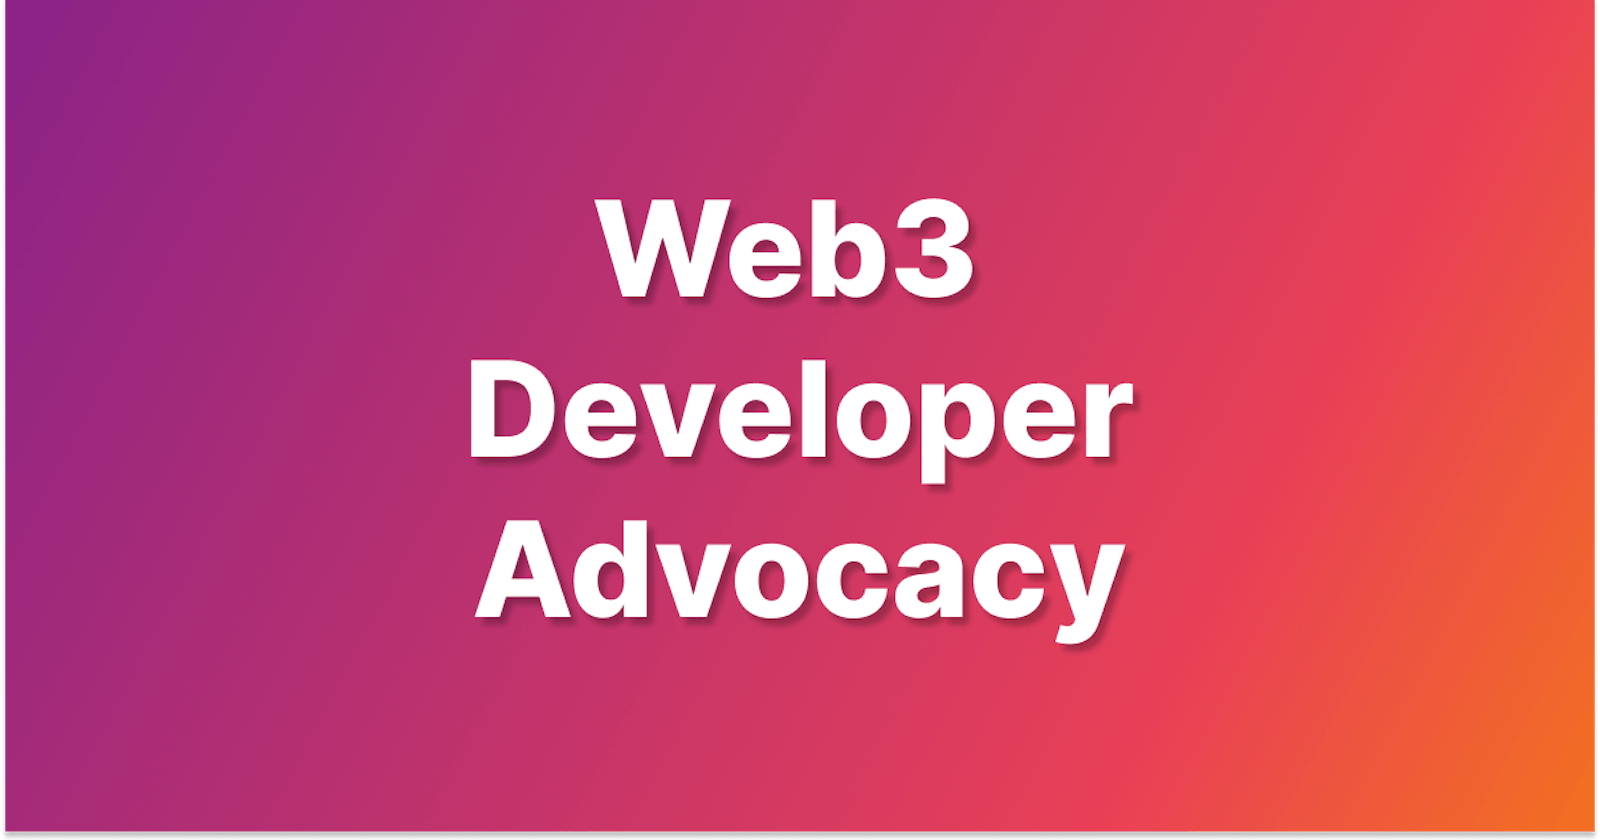 Web3 Developer Advocacy